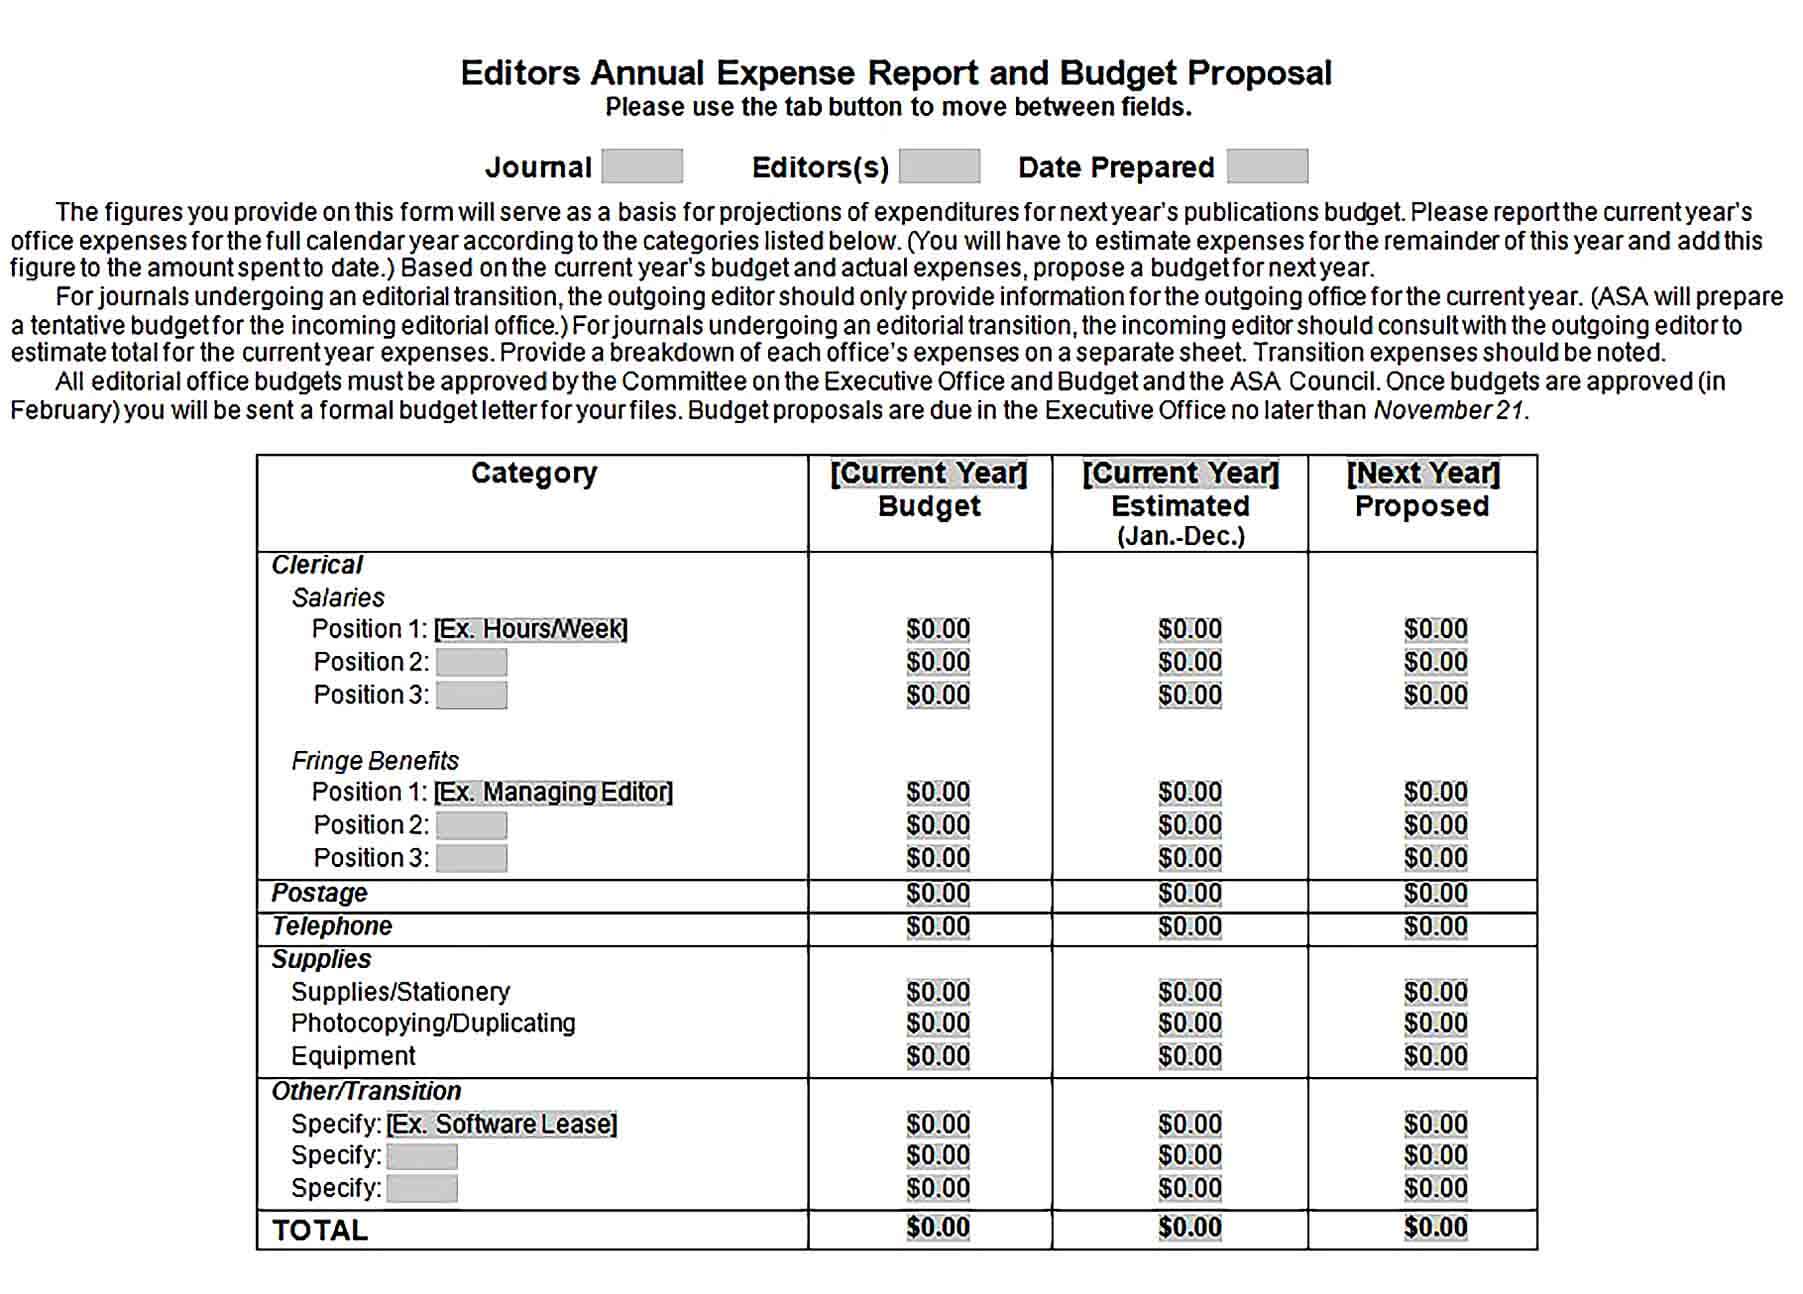 Sample Editors Annual Expense Report